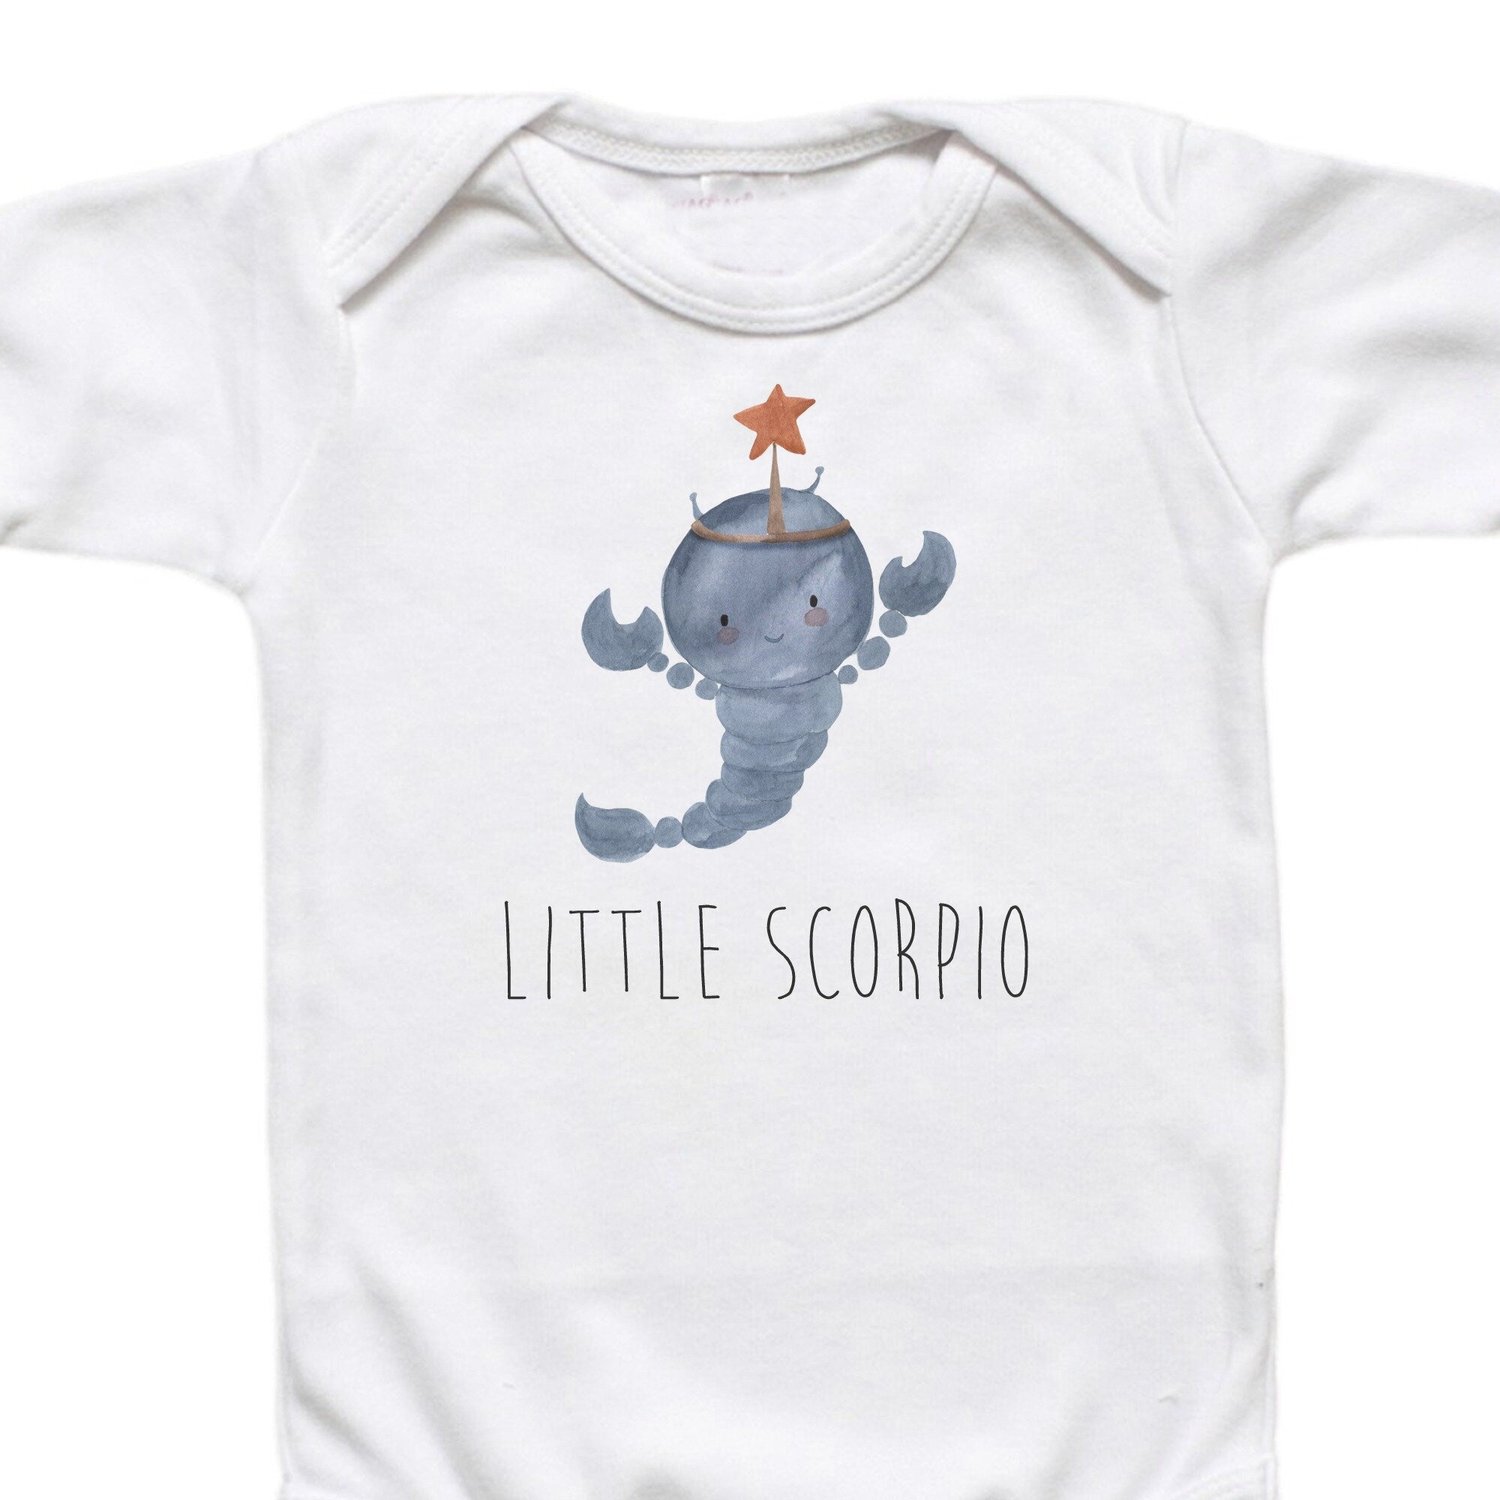 Custom Baby Bodysuit Scorpio Zodiac Sign Funny Cotton Boy & Girl Baby  Clothes